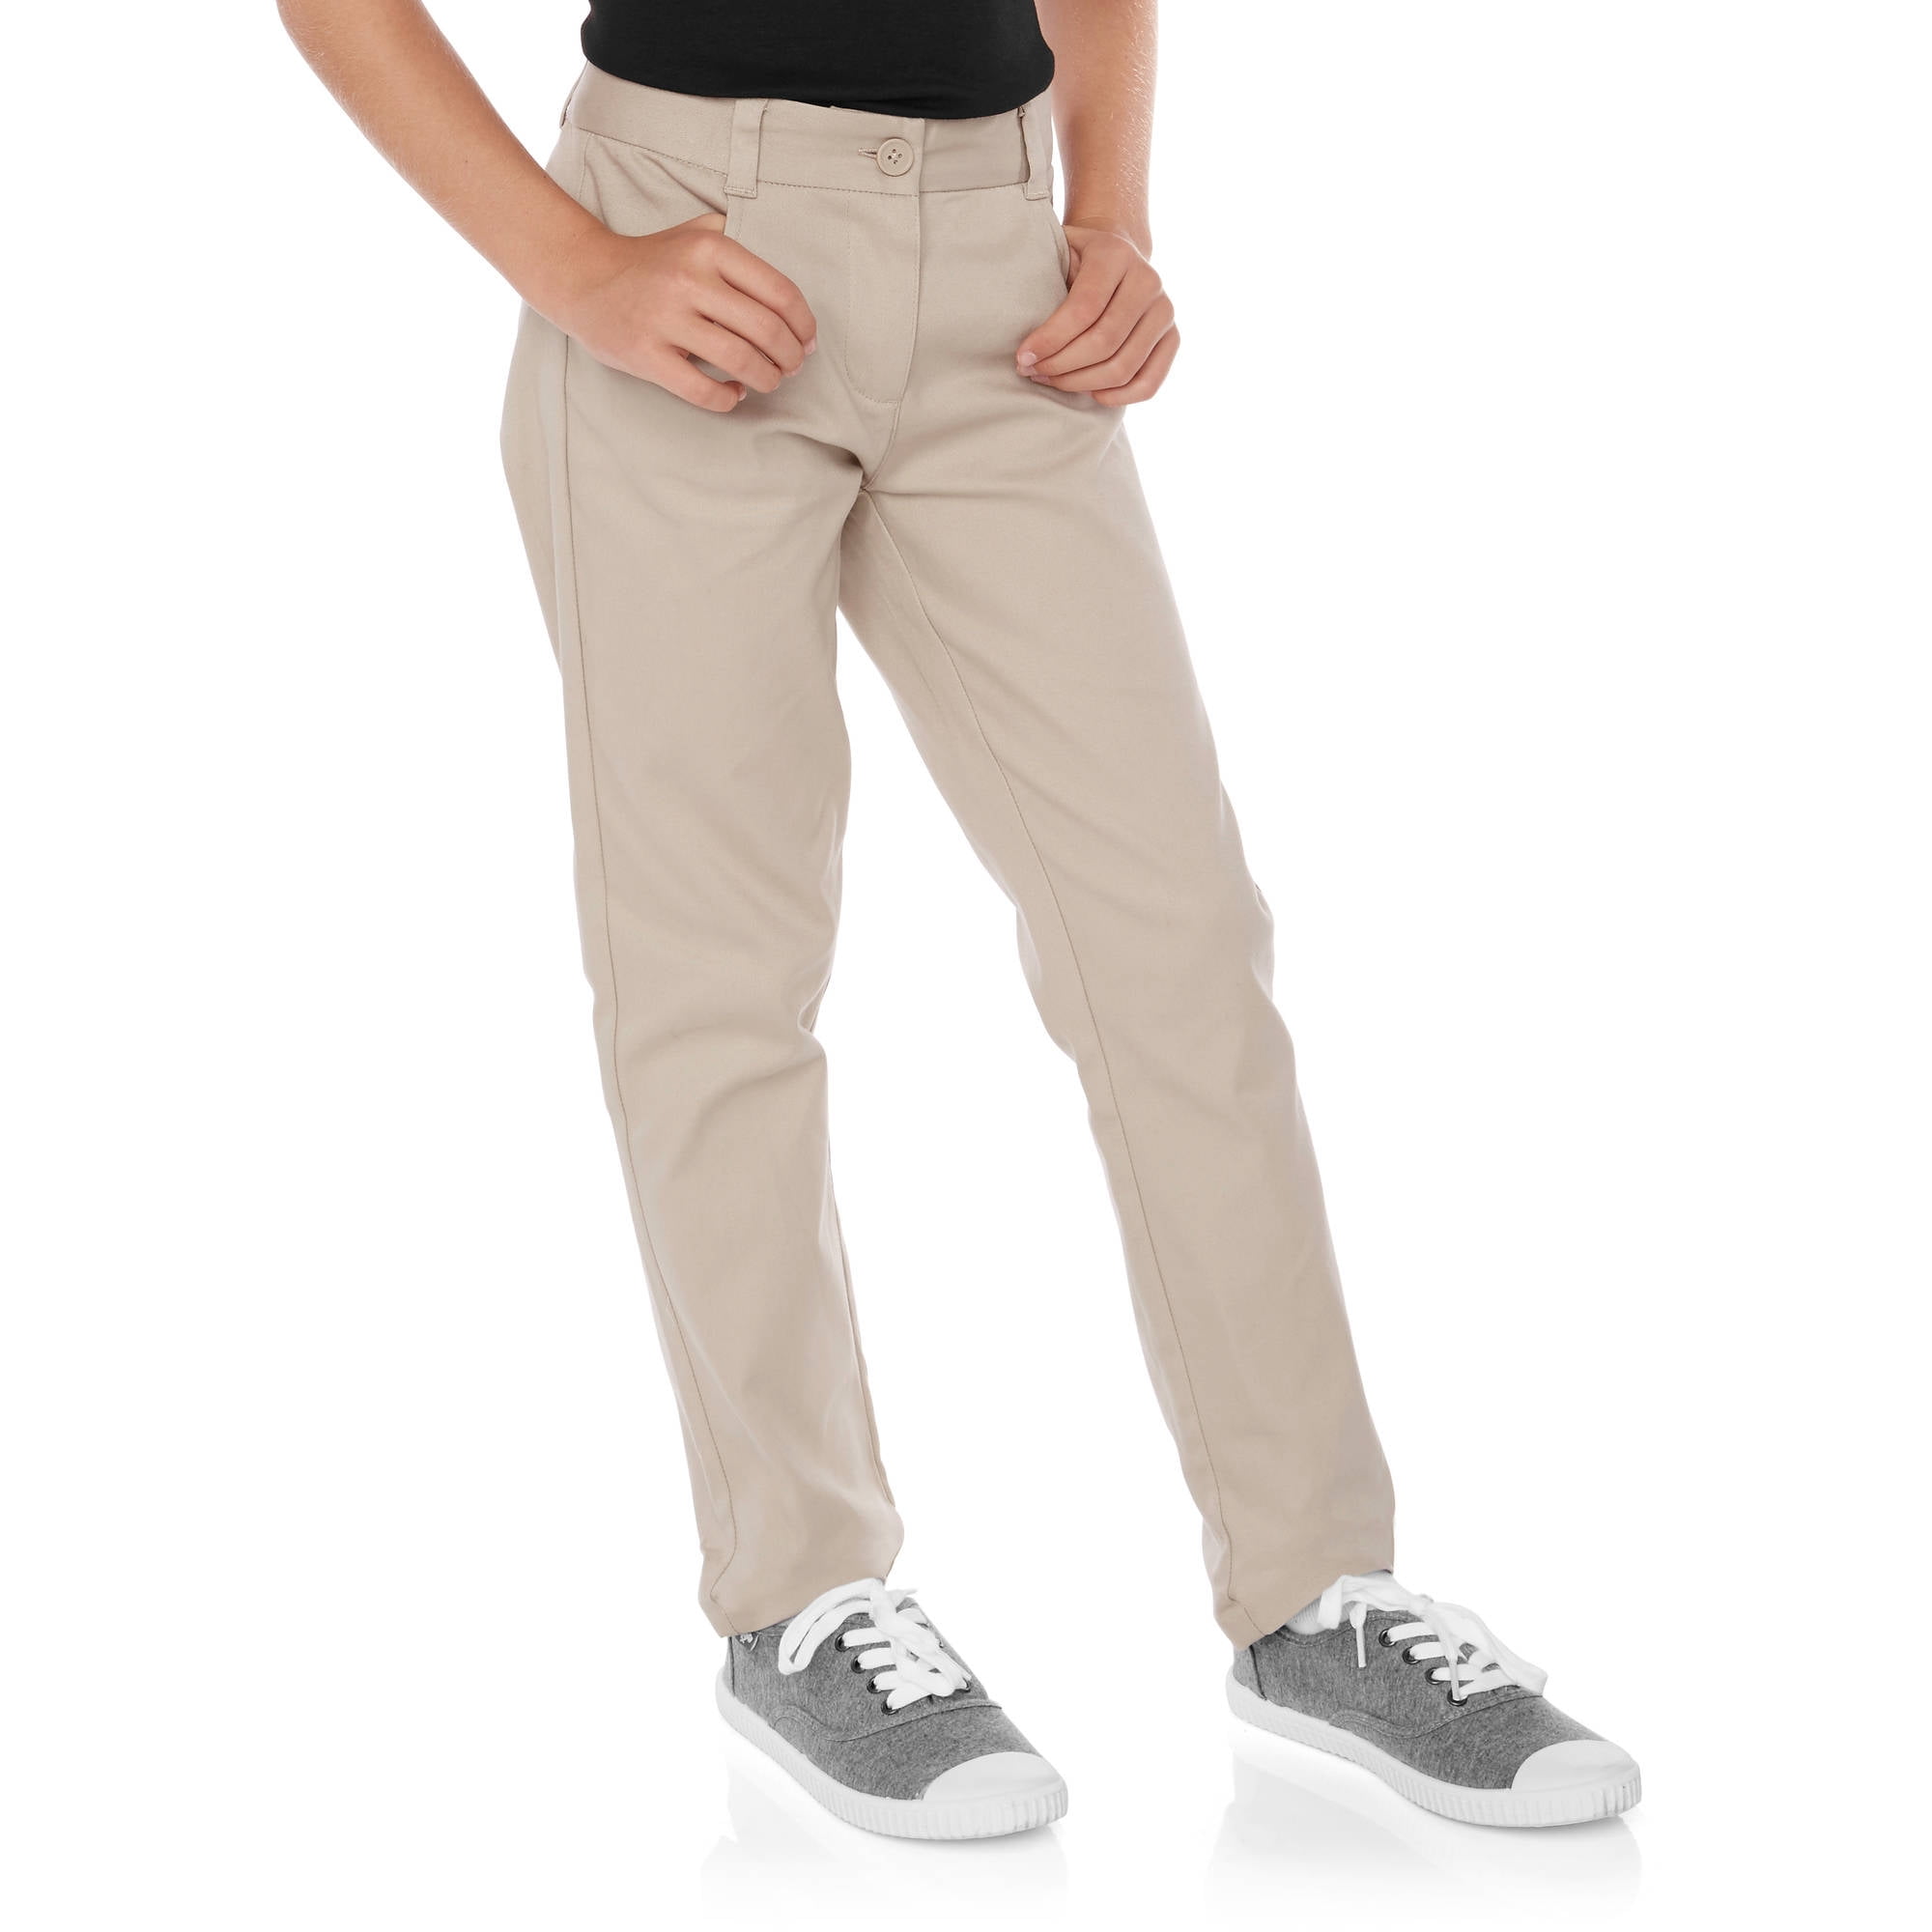 George Girls' School Uniforms Skinny Pants - Walmart.com